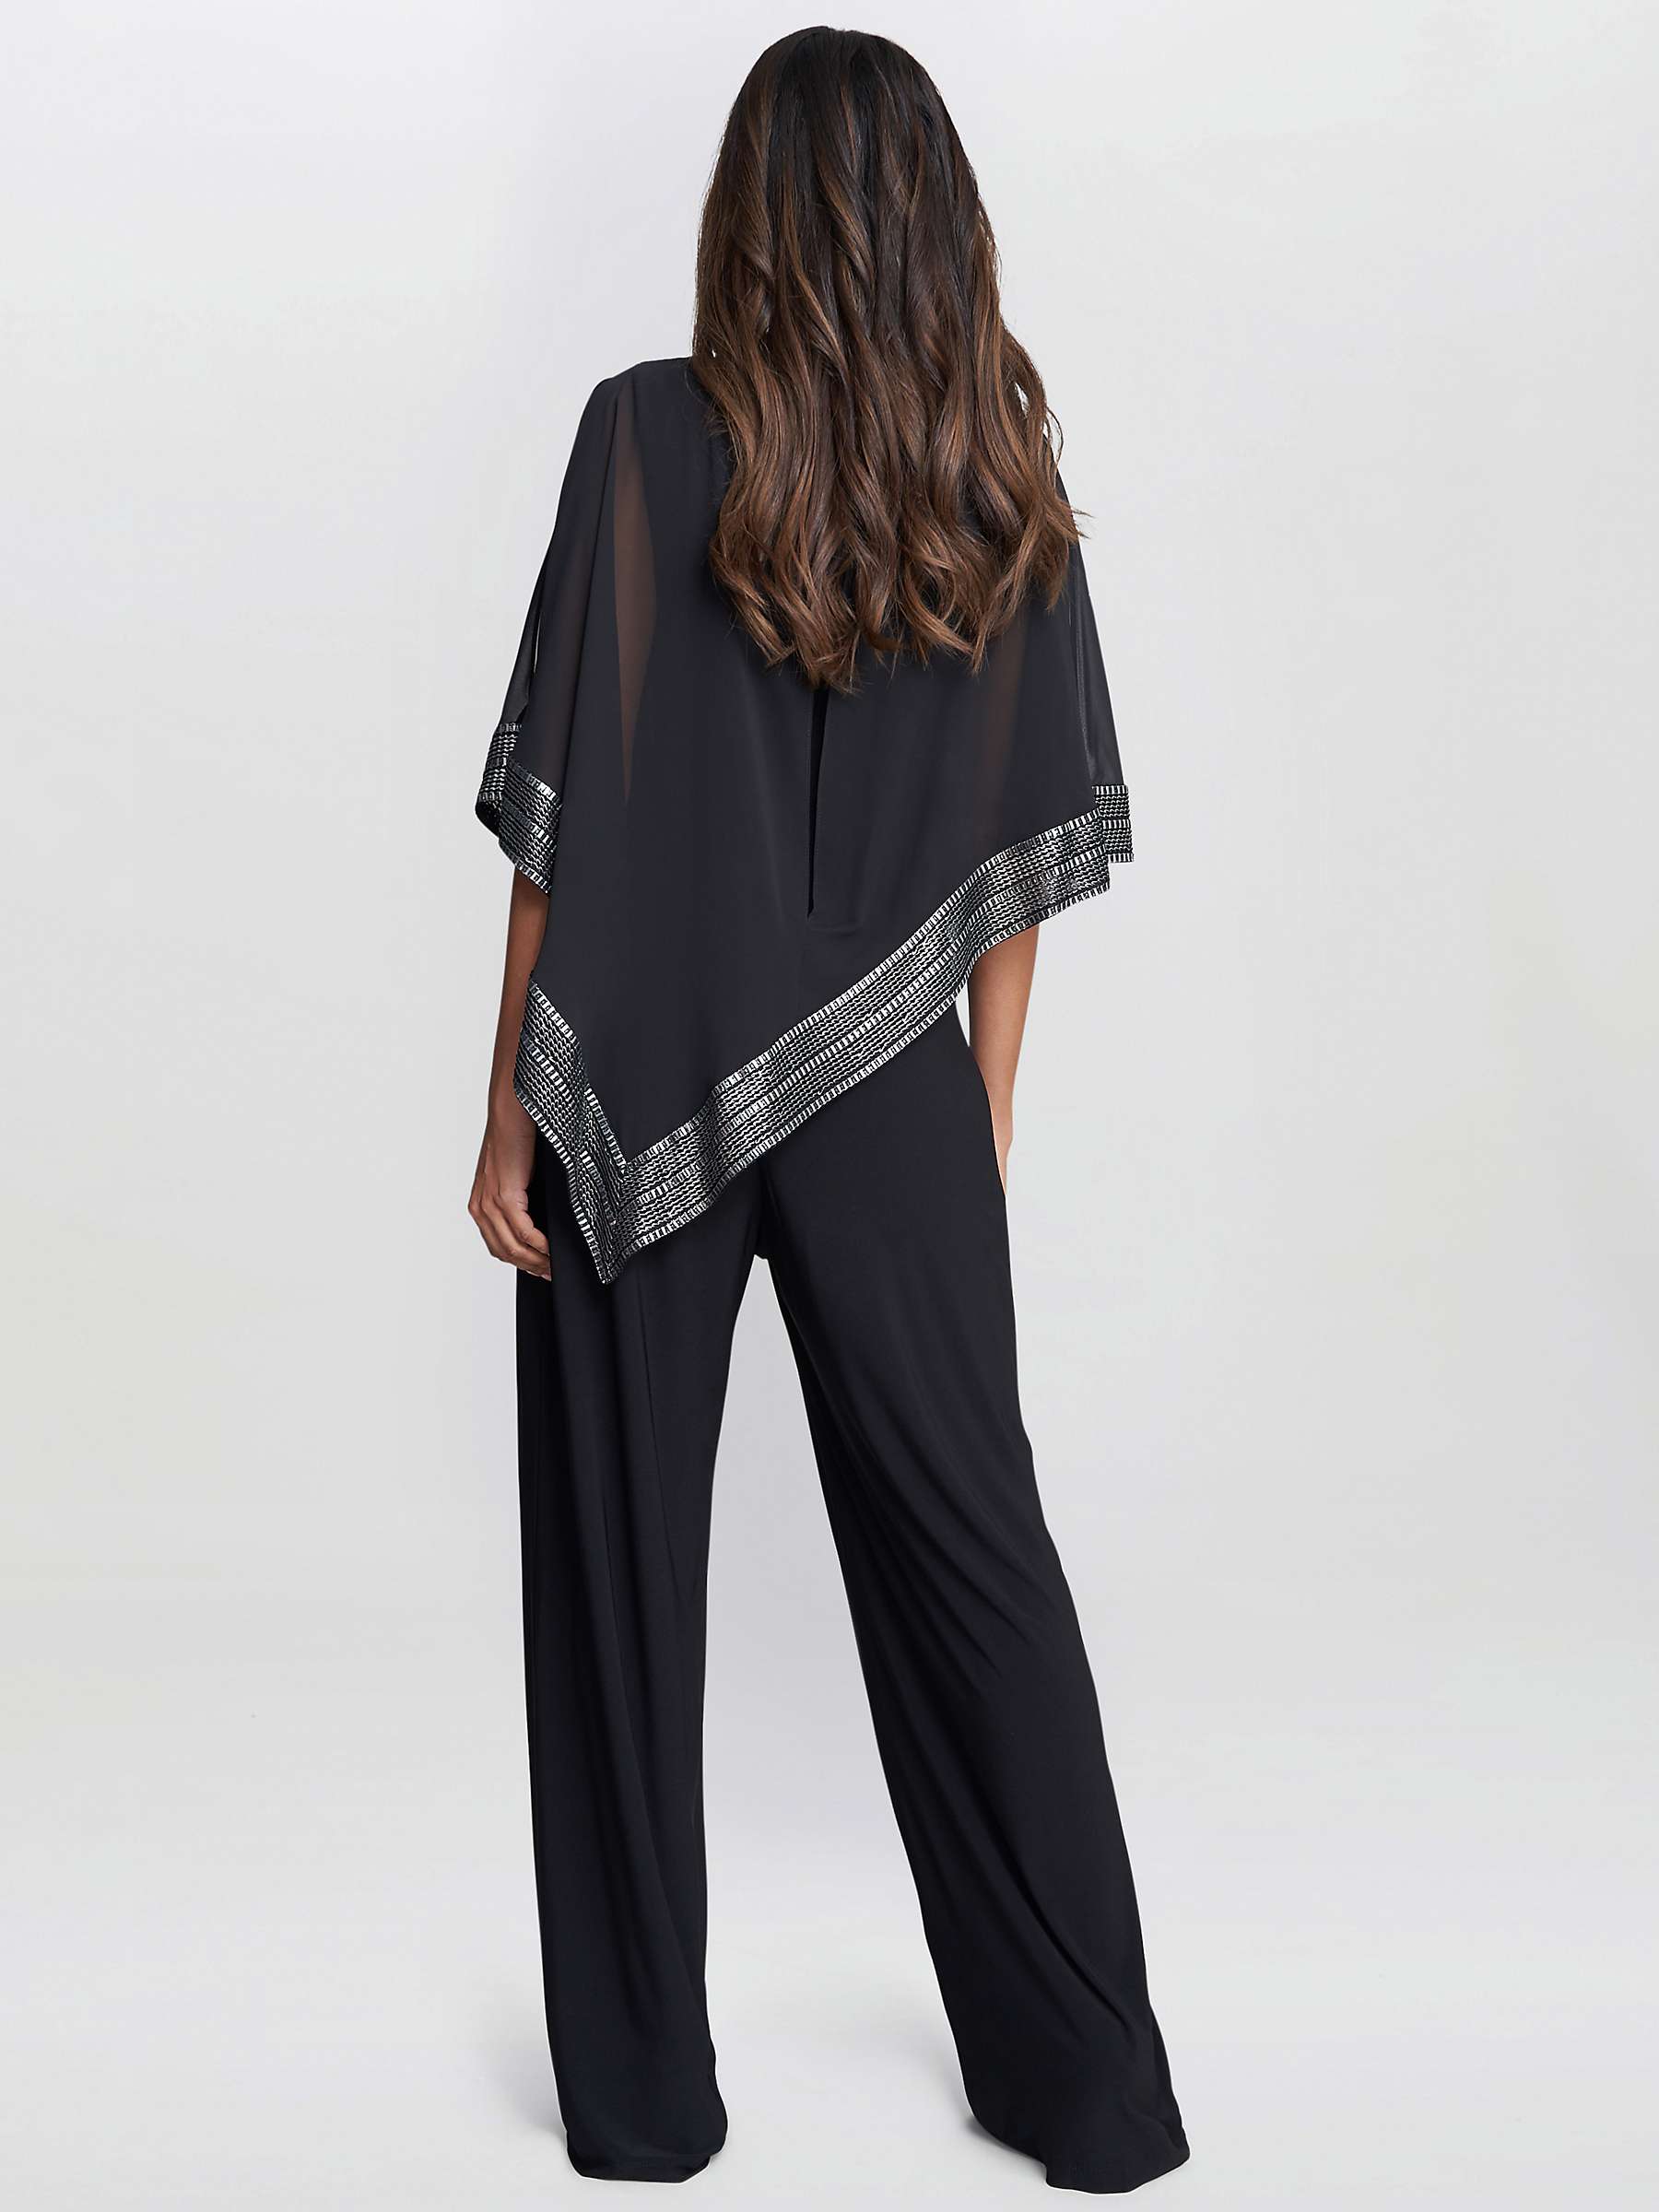 Gina Bacconi Eve Asymmetrical Cape Jumpsuit, Black at John Lewis & Partners